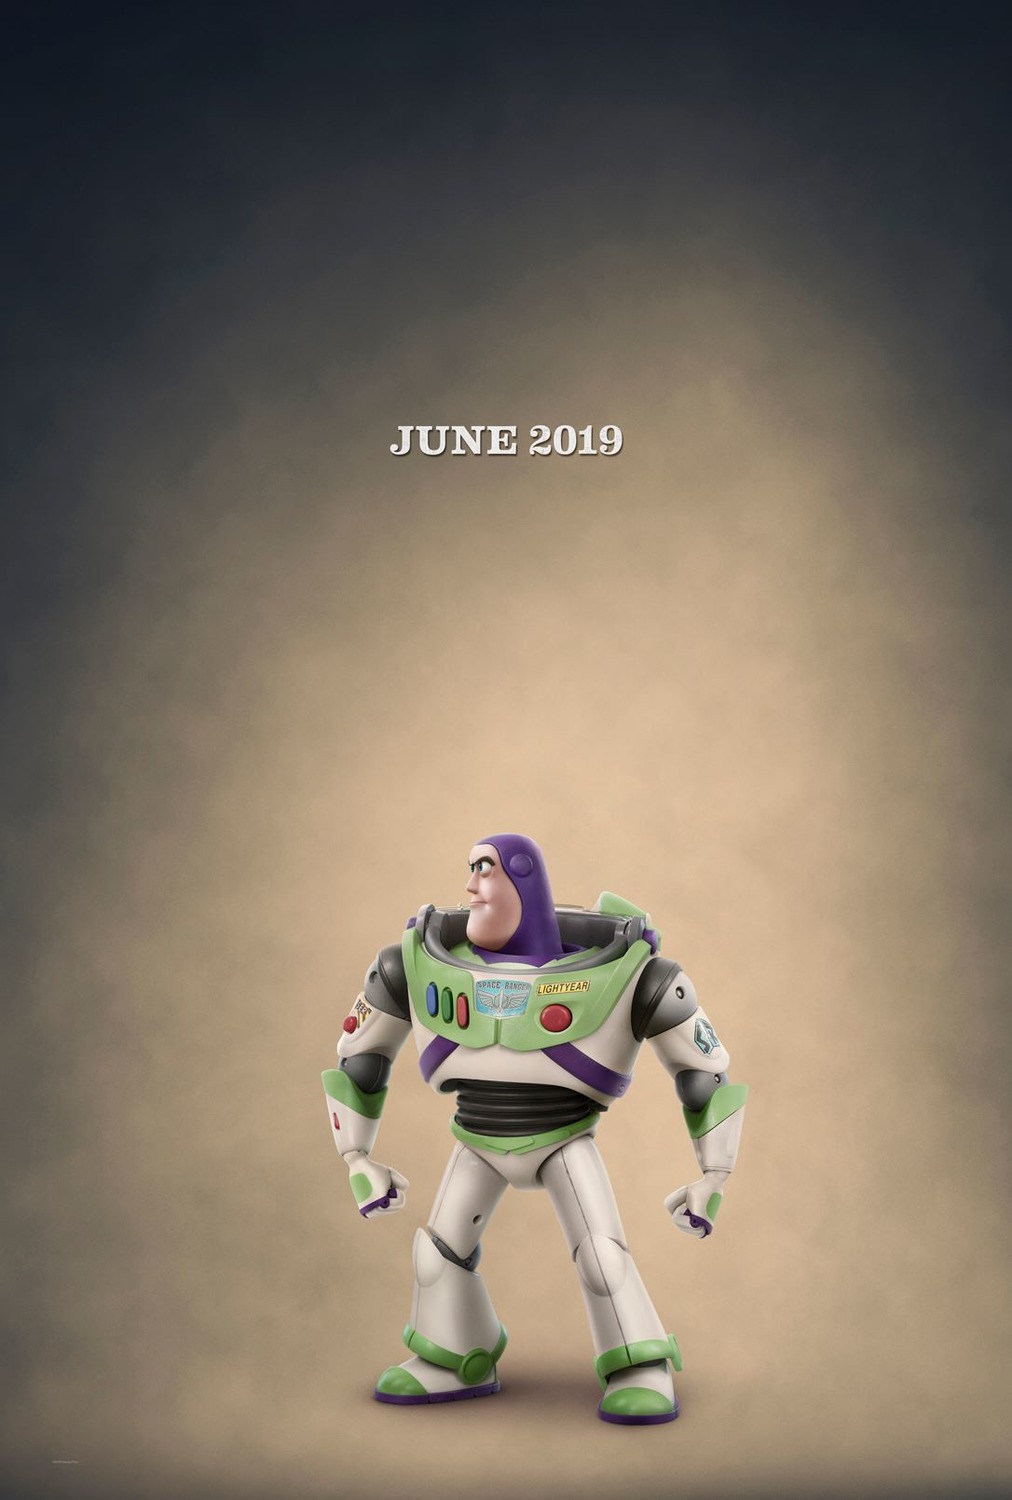 Toy Story 4 - film 2019 - AlloCiné